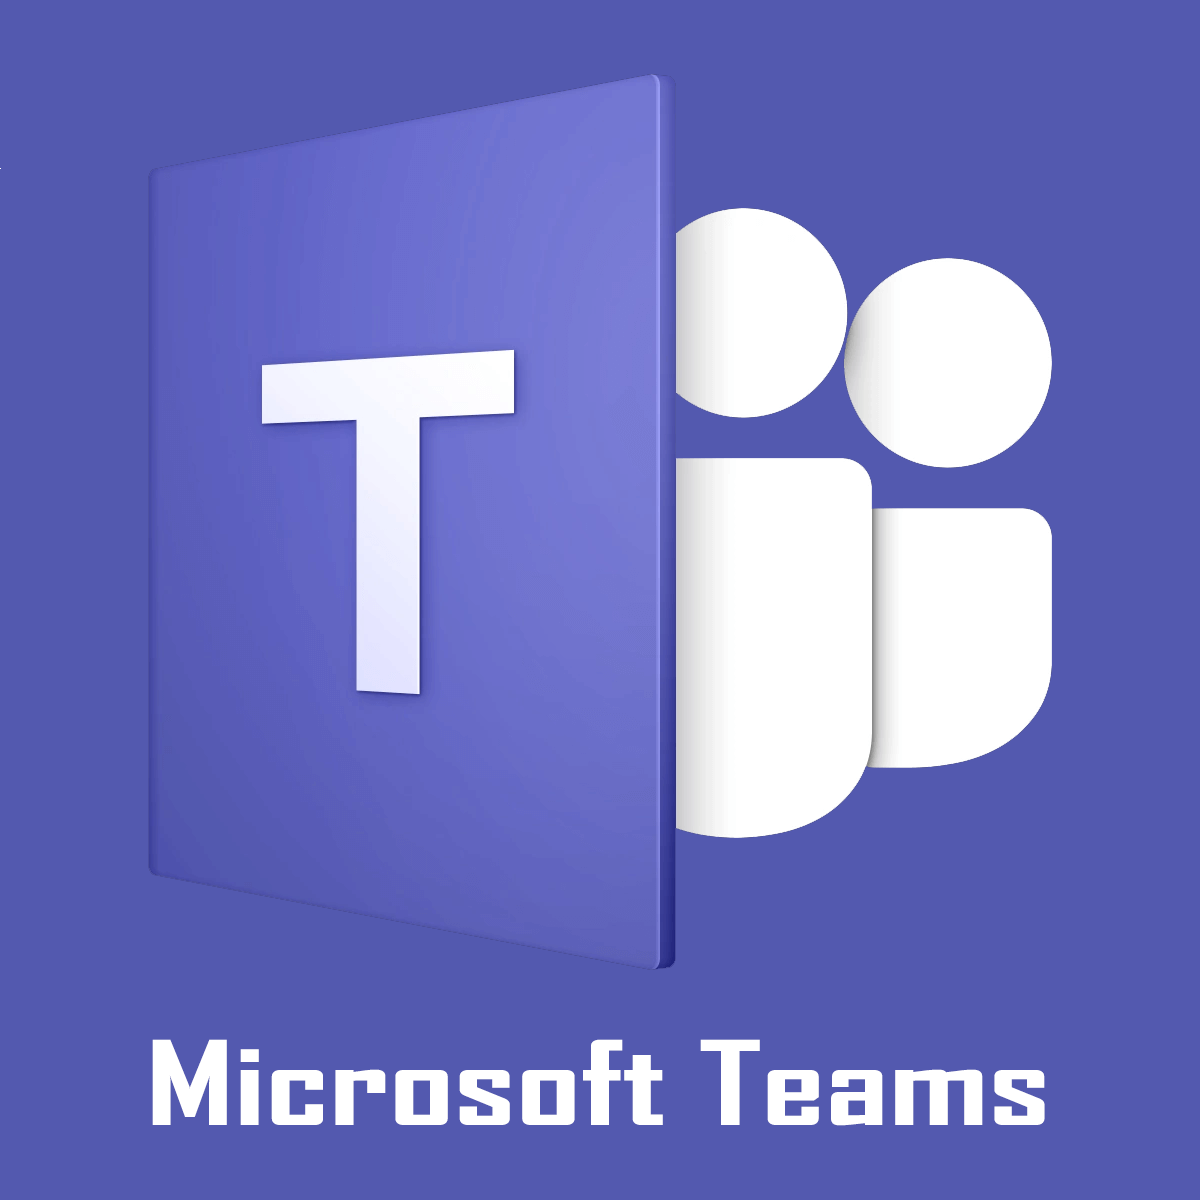 background blur in microsoft teams